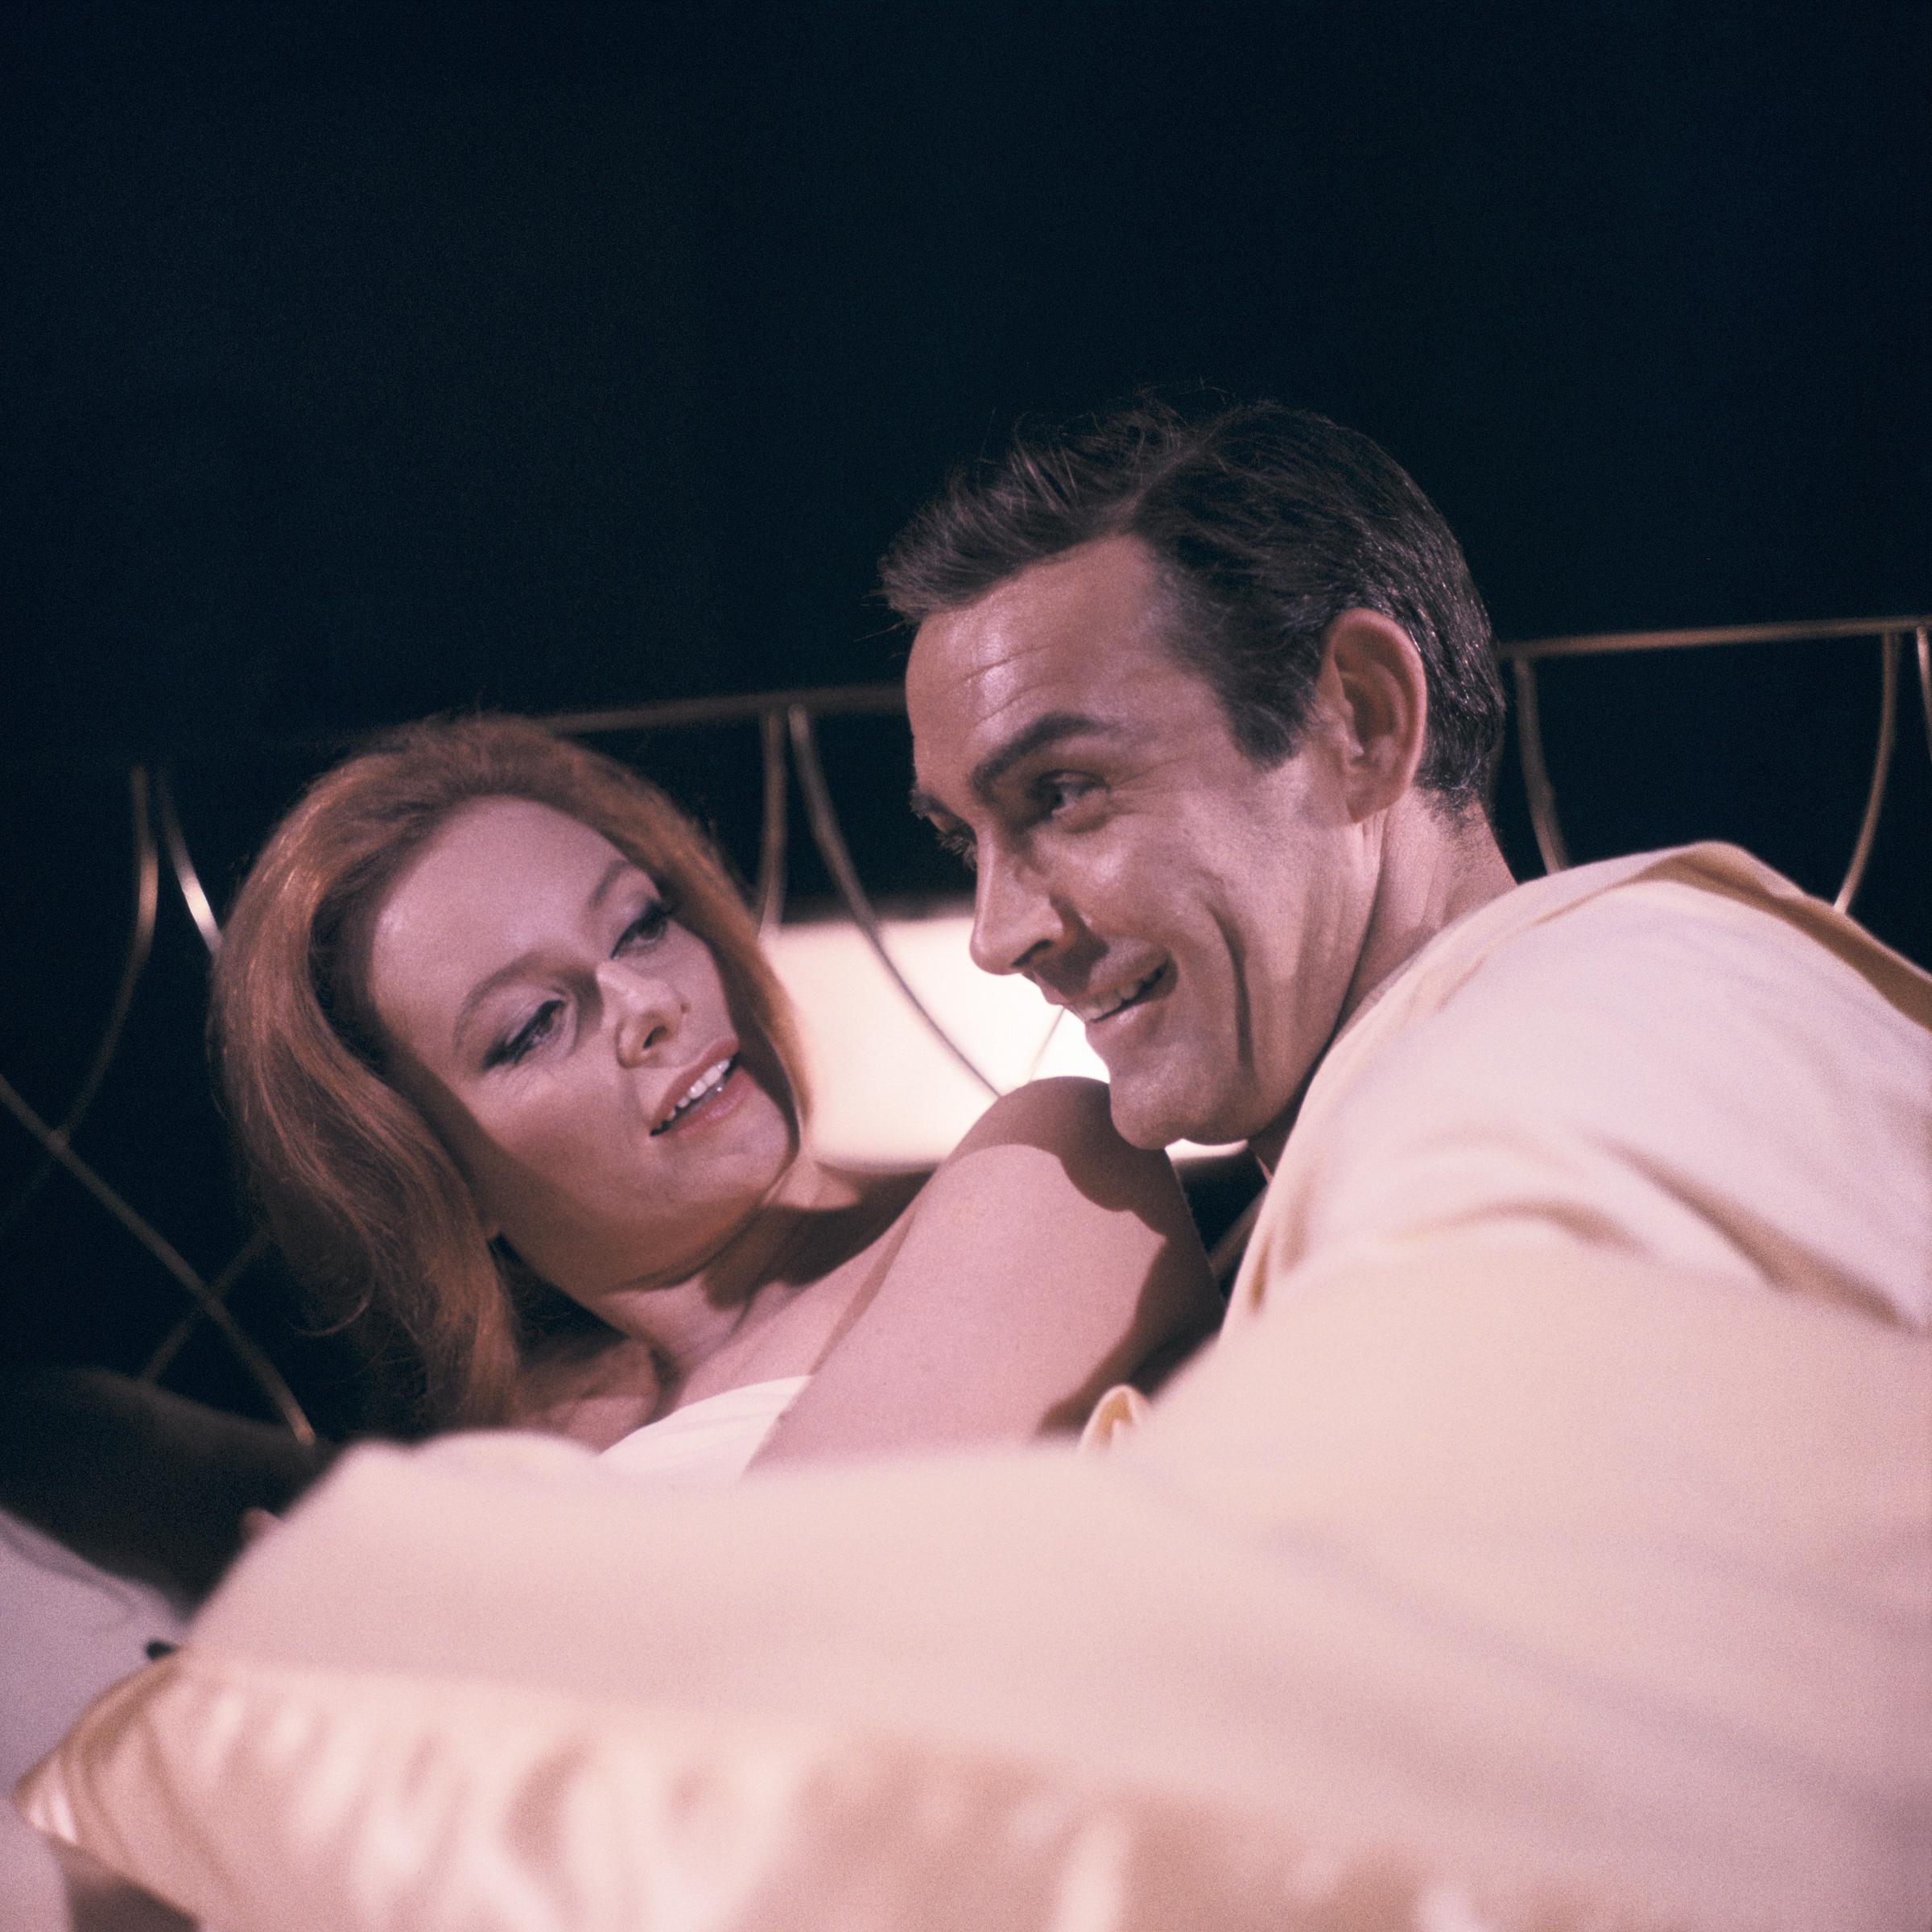 Luciana Paluzzi und Sean Connery in "Thunderball" im Jahr 1965. | Quelle: Getty Images